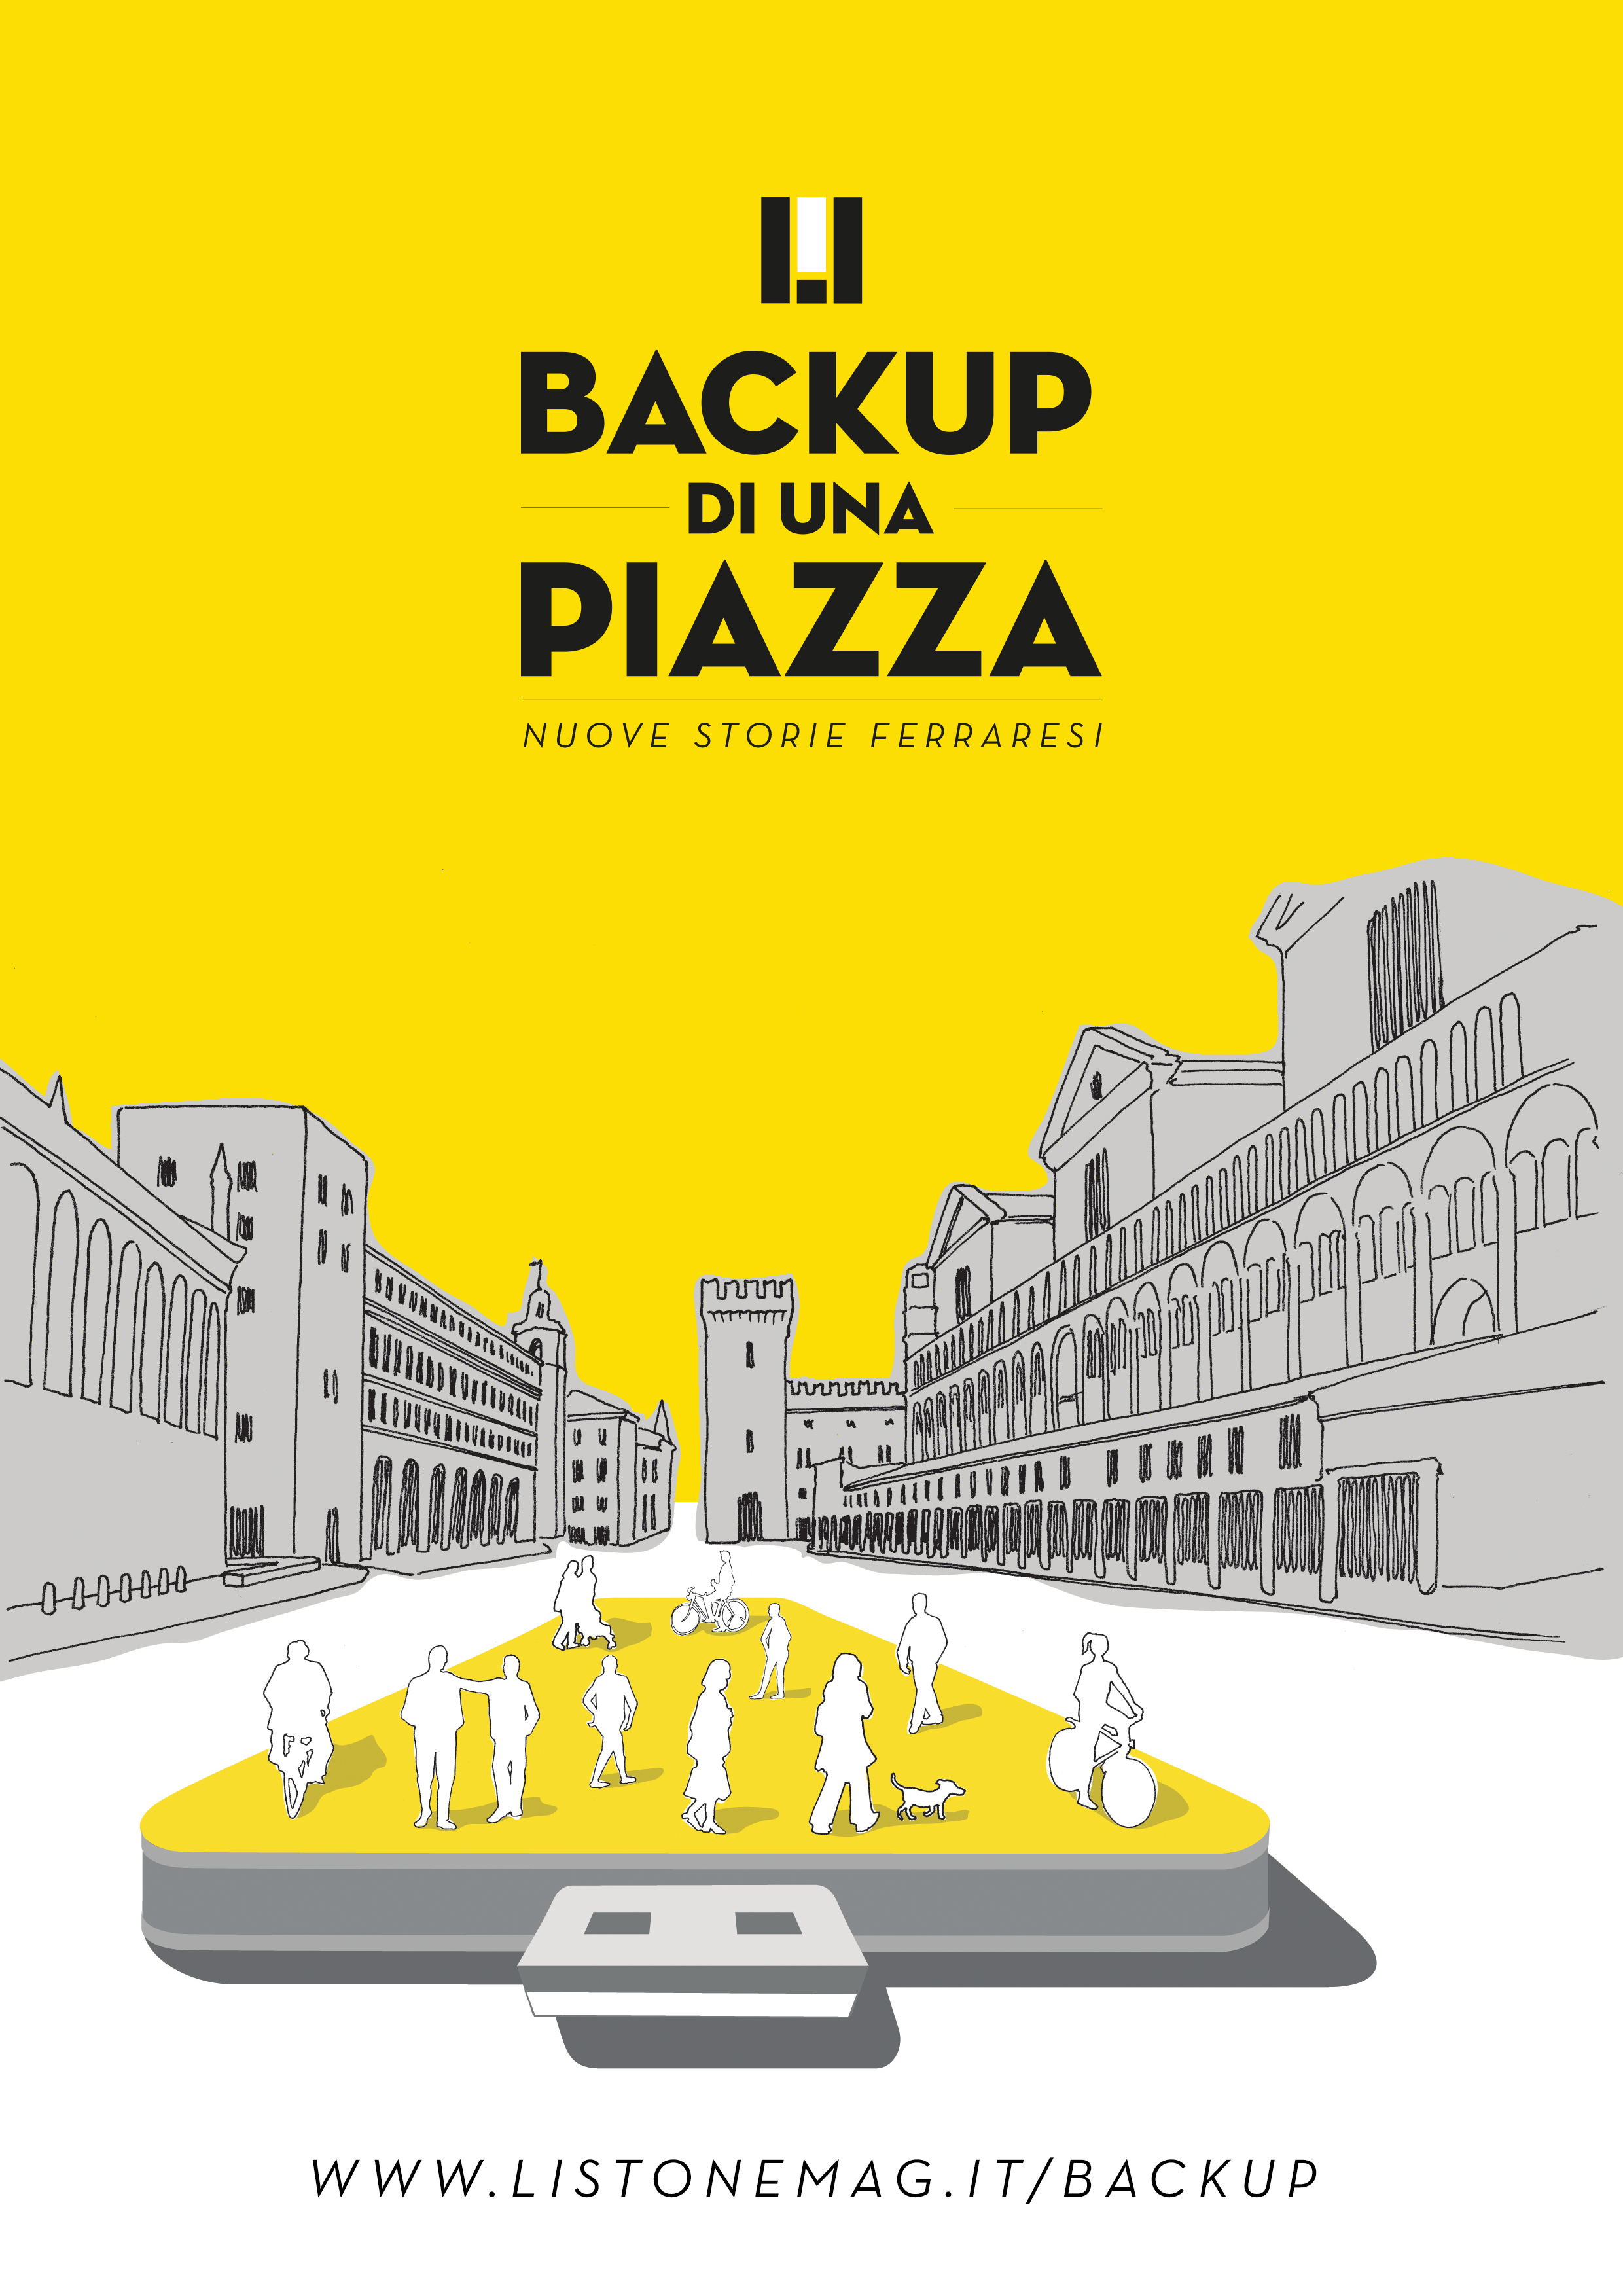 Featured image for “Backup di una piazza”